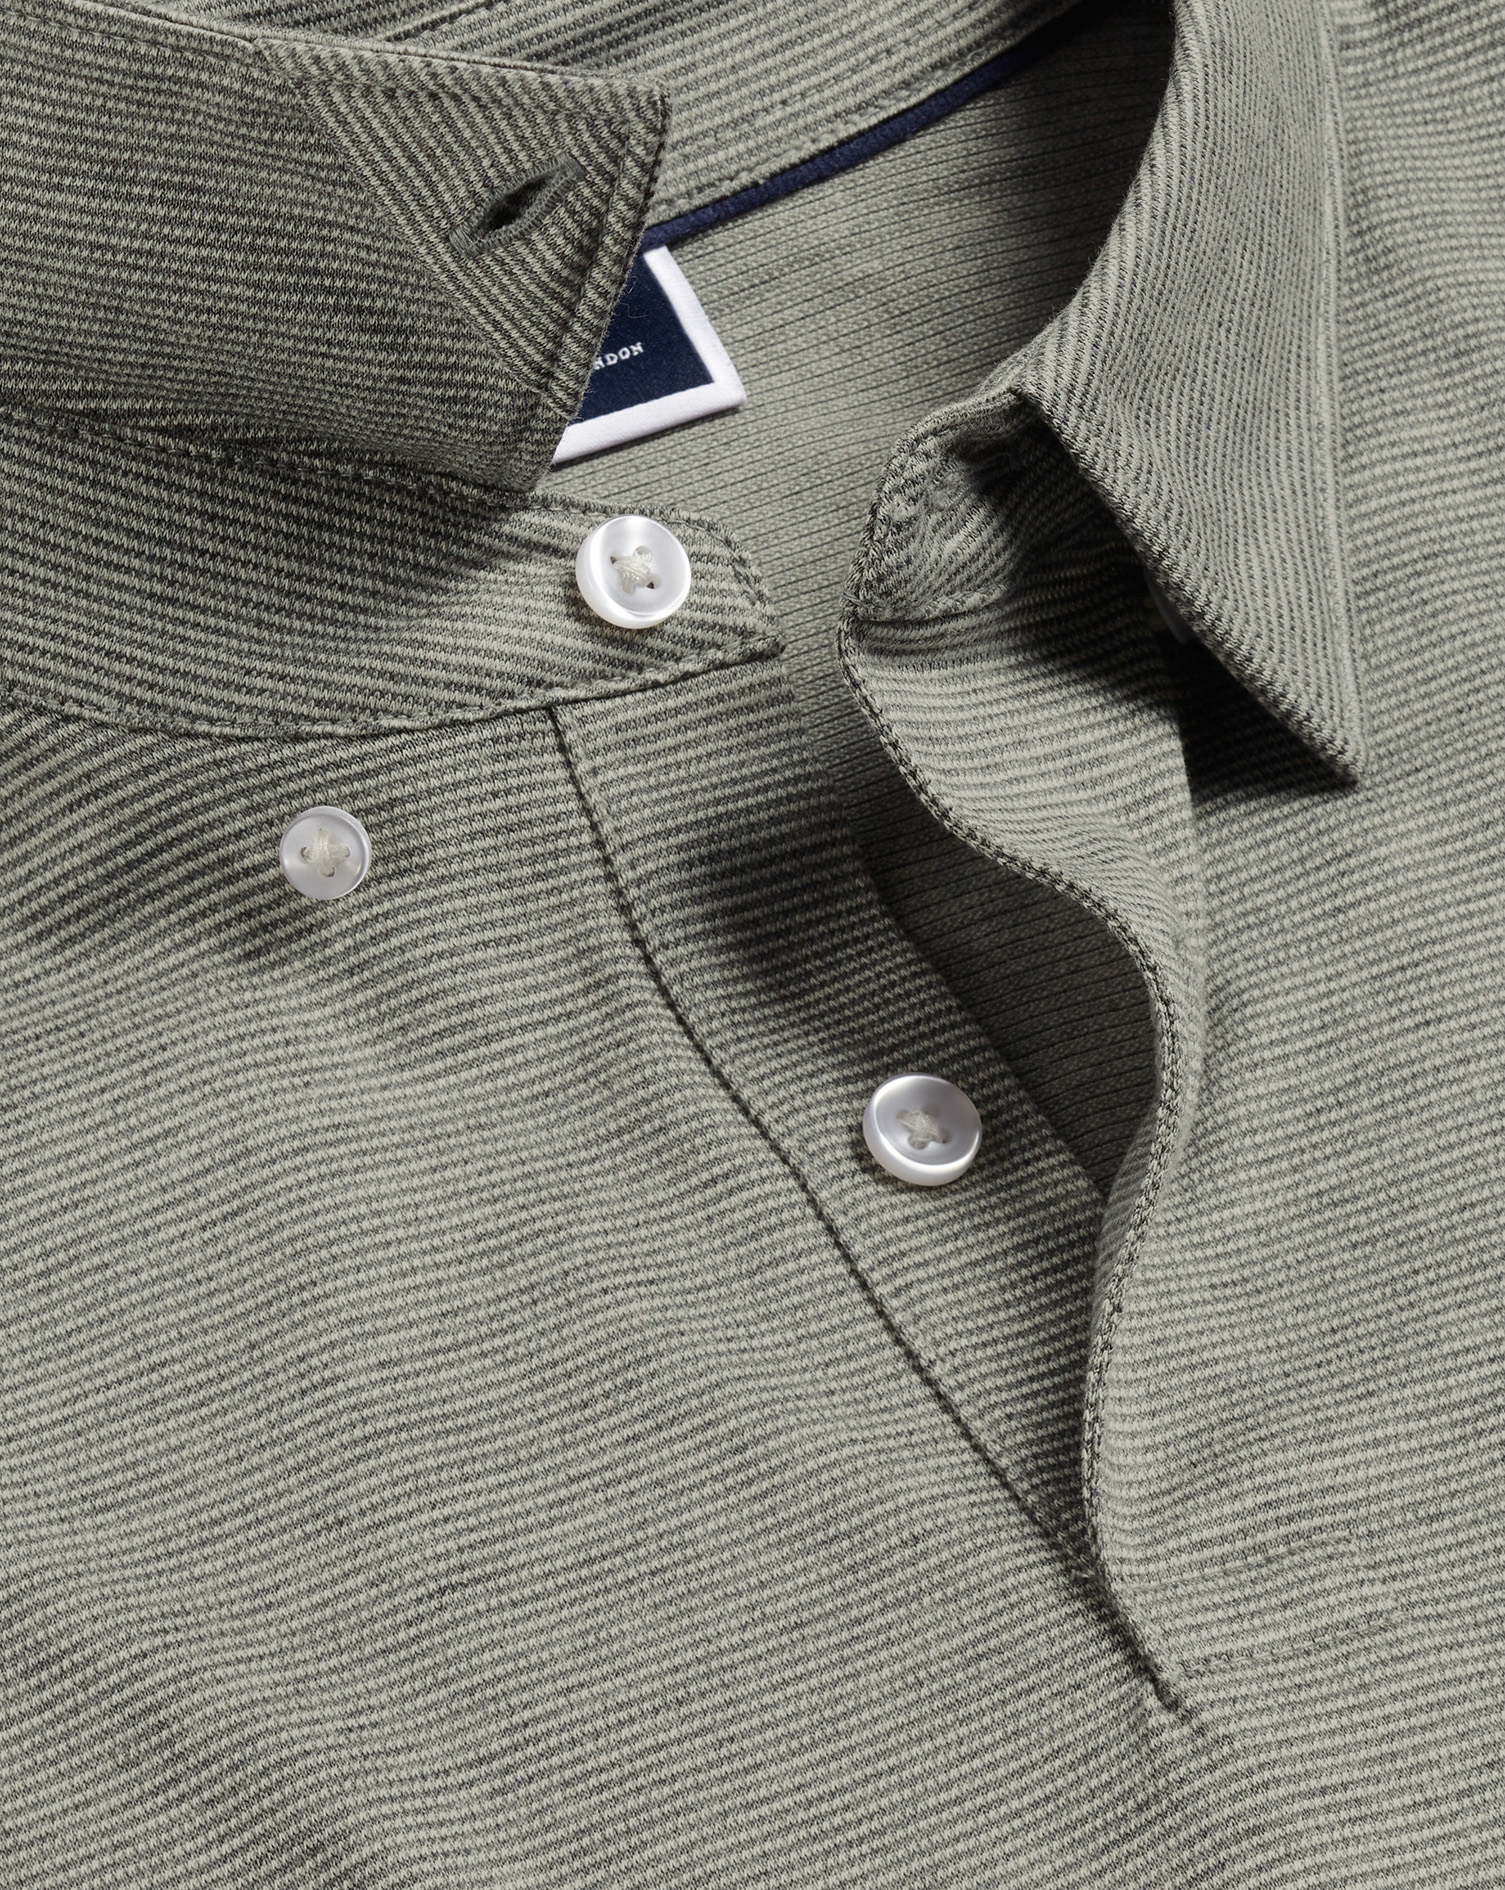 Men's Charles Tyrwhitt Birdseye Stripe Jacquard Polo Shirt - Light Grey Size Large Cotton
